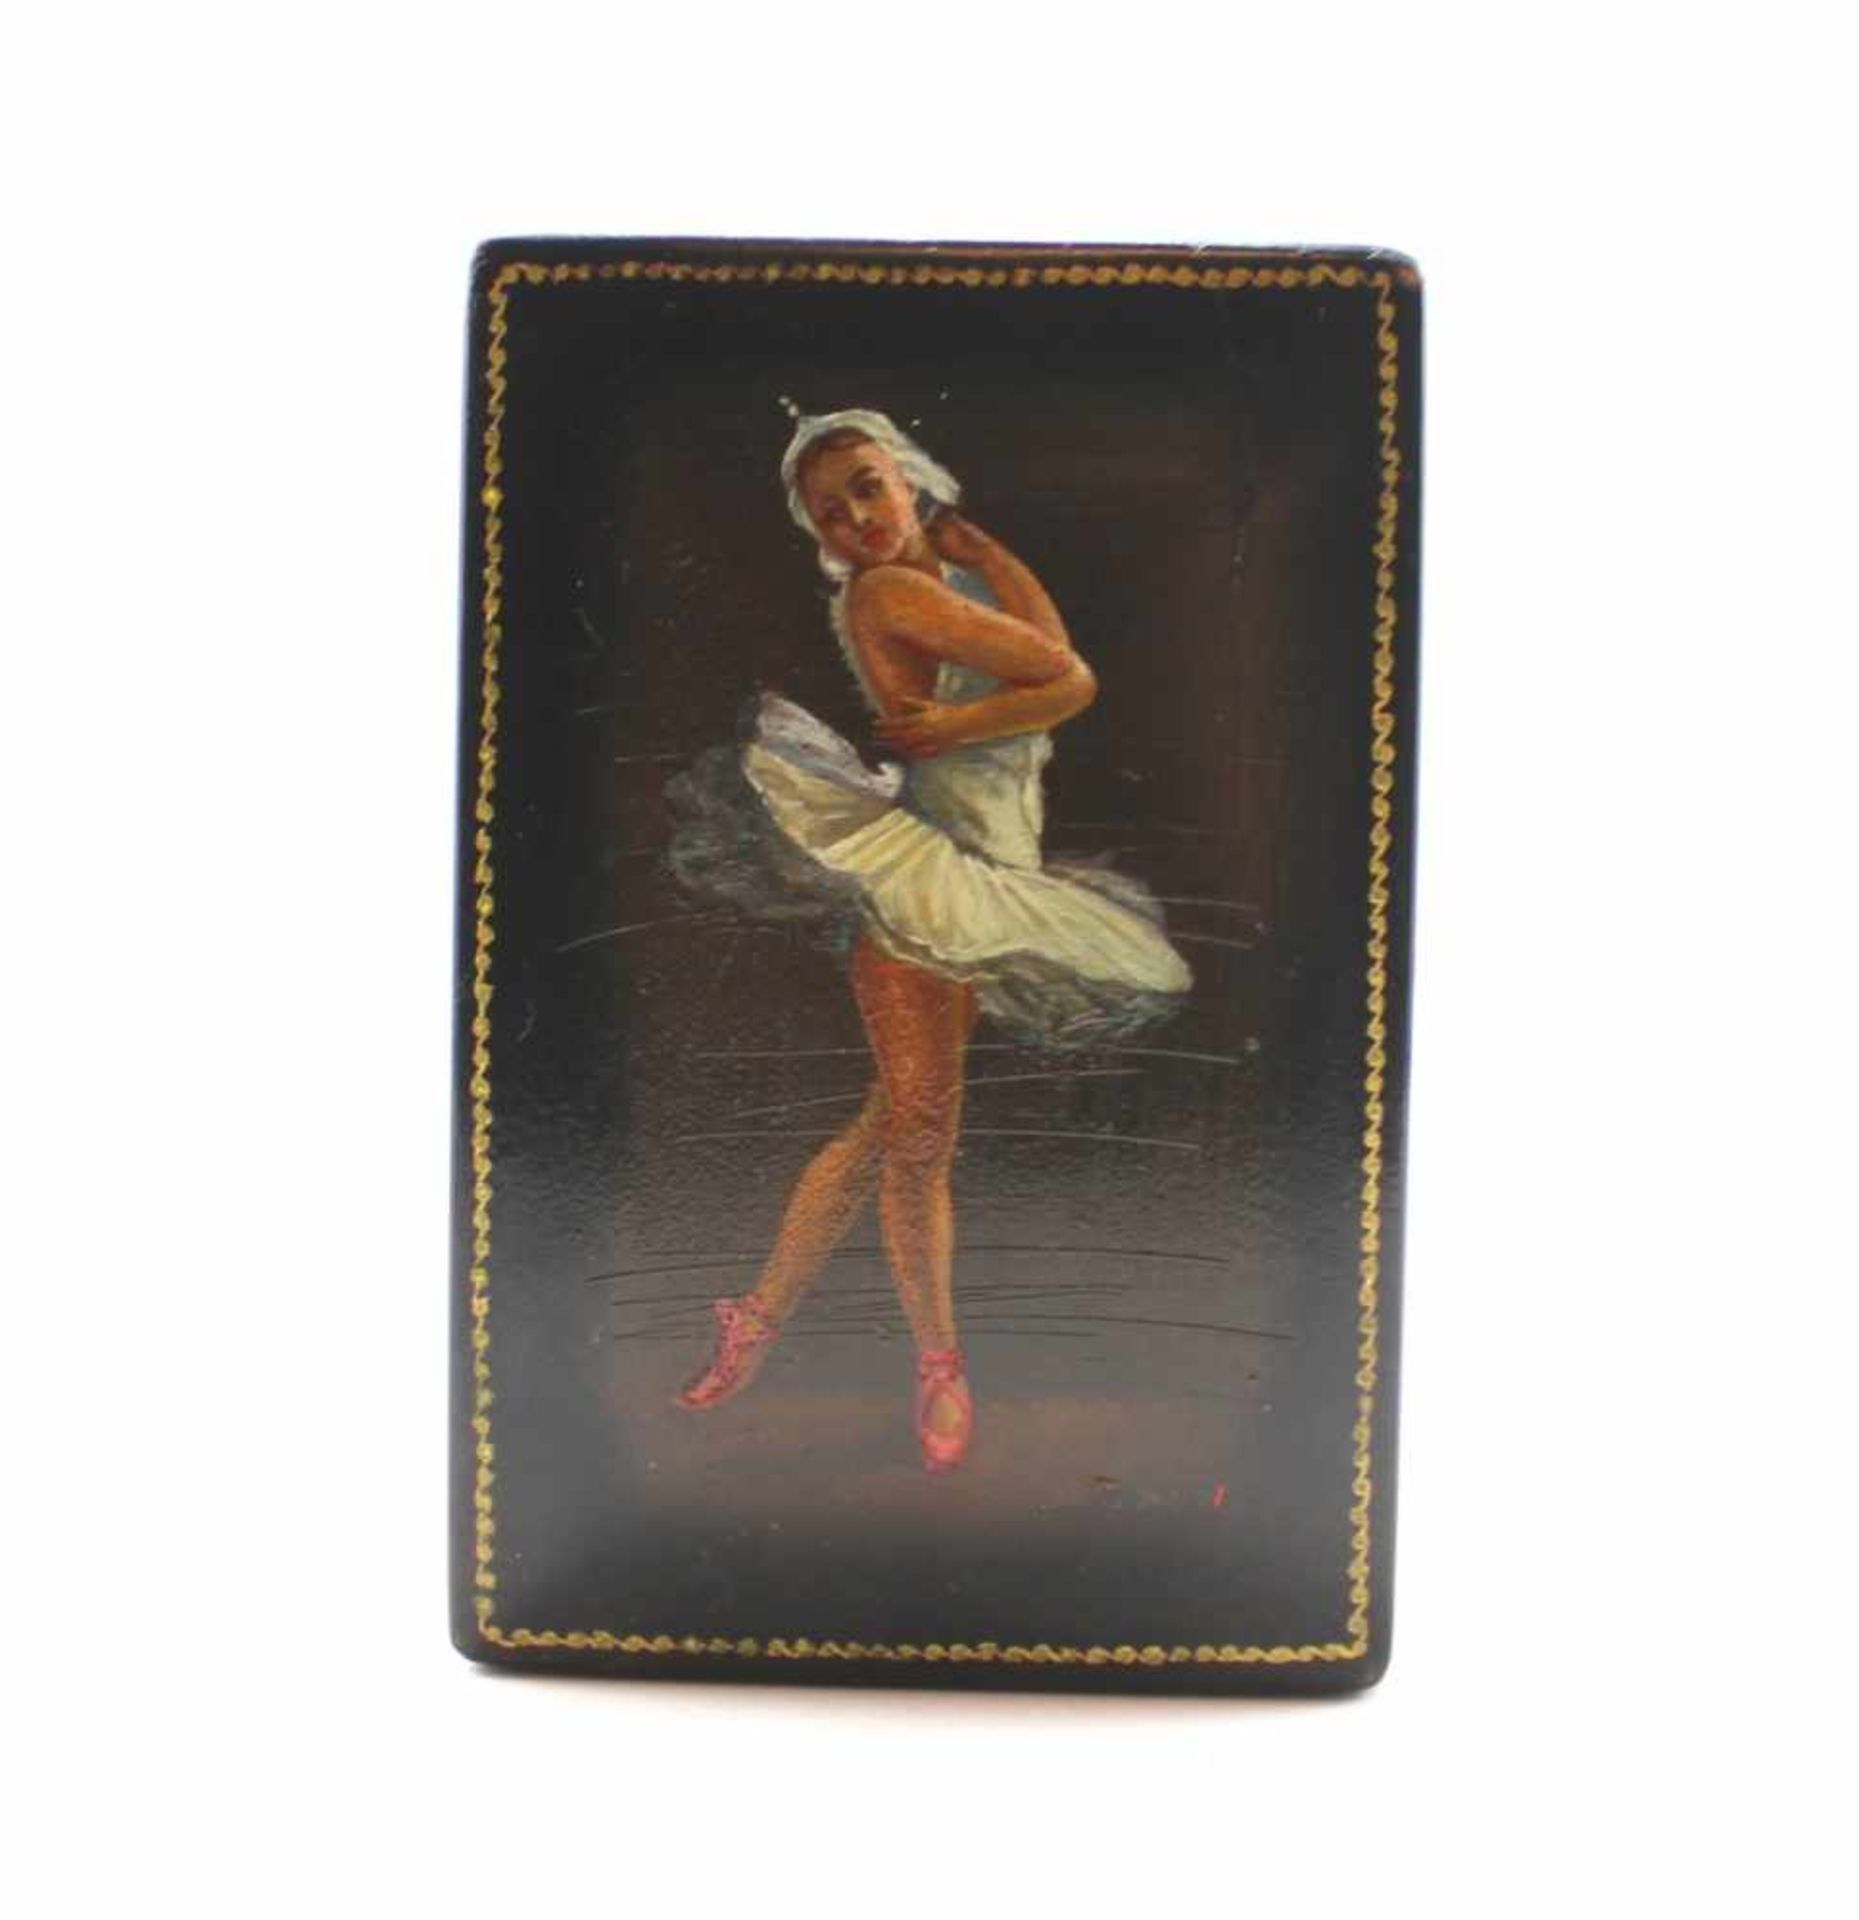 Lackdose - russisch 20.Jahrhundert "Ballerina", rechteckige Form in Holz, Maße ca. 2,5x8x5,5 cm